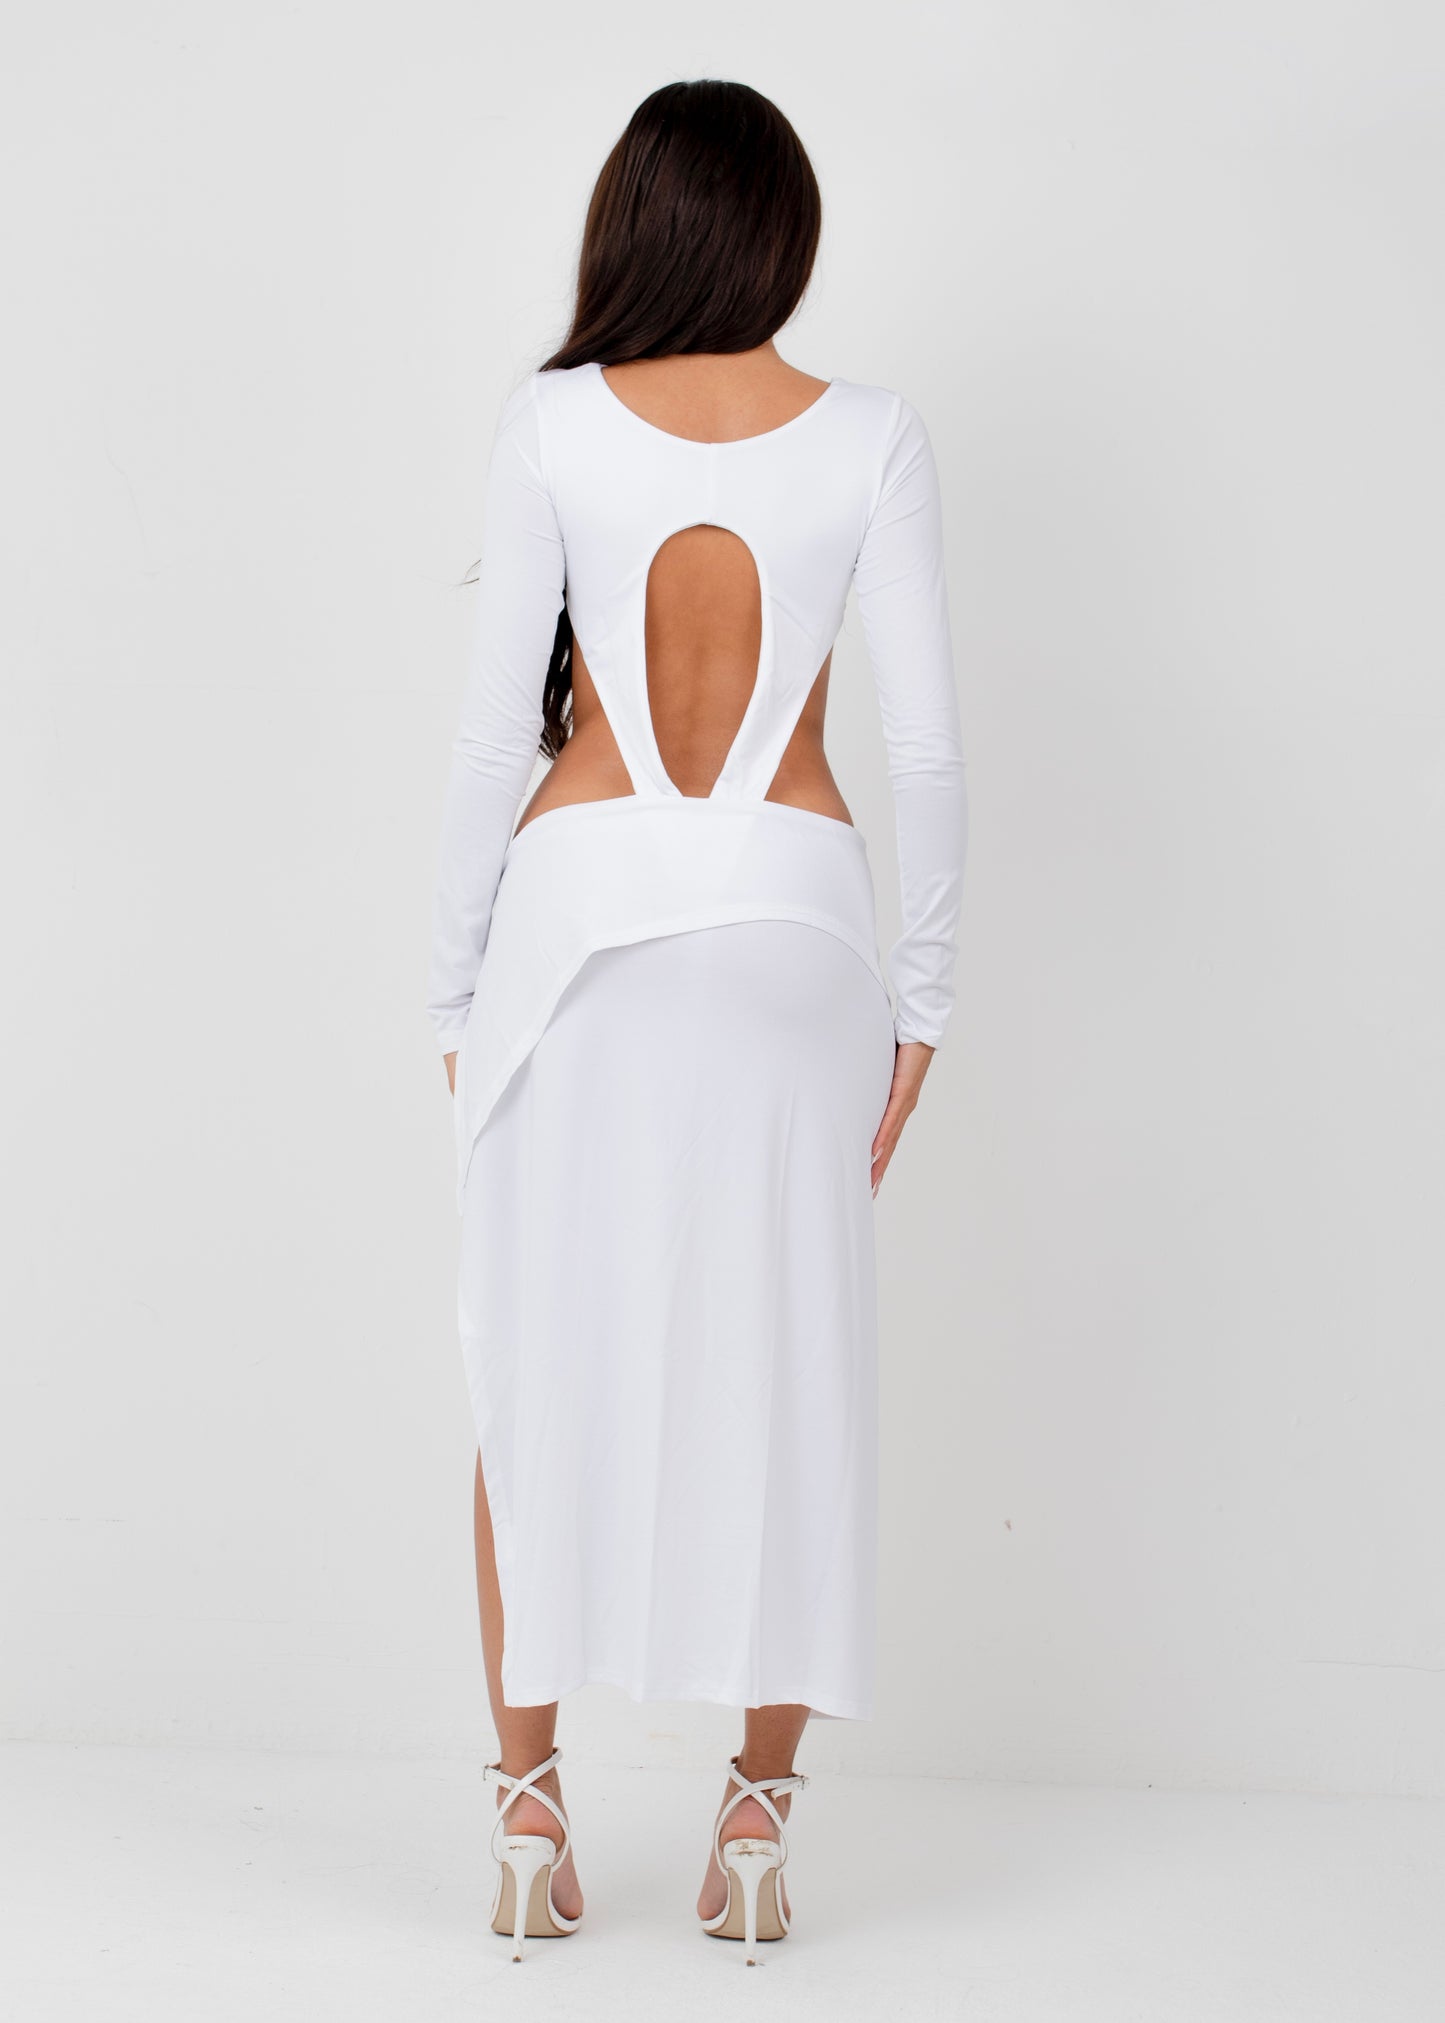 CLARA - White Crop Top & Mini Skirt